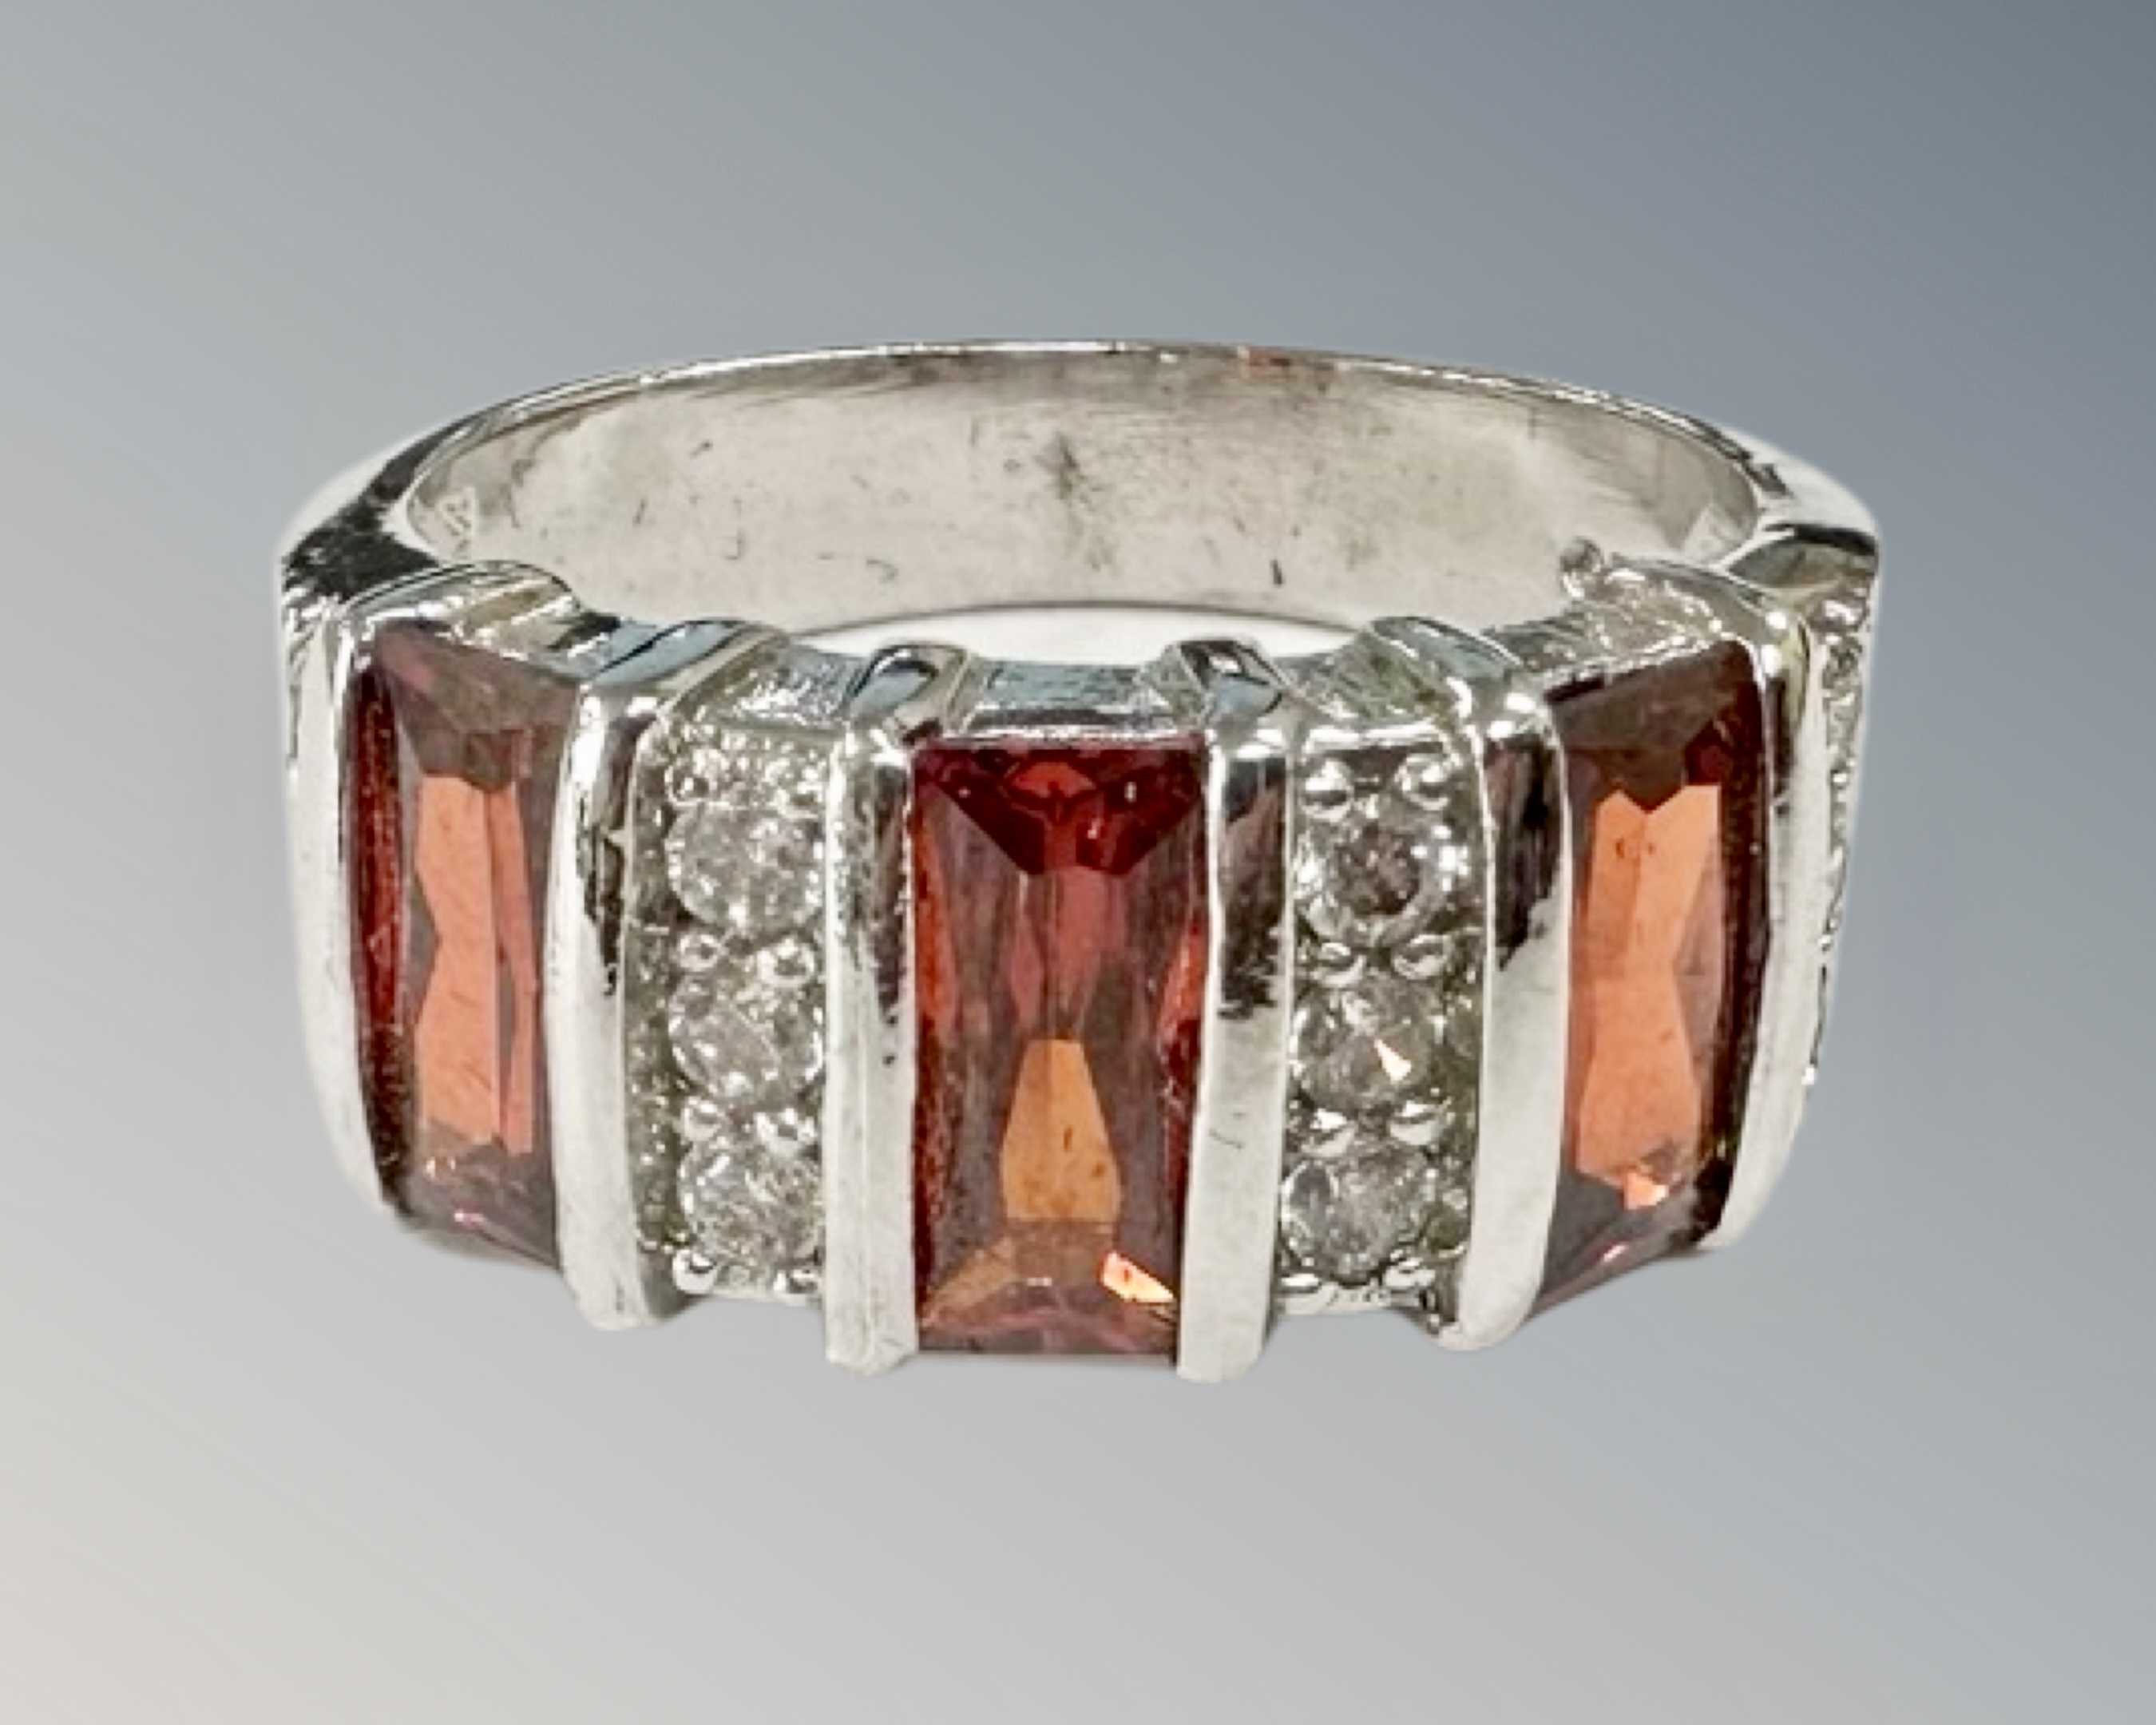 A silver gem-set dress ring, size O/P.